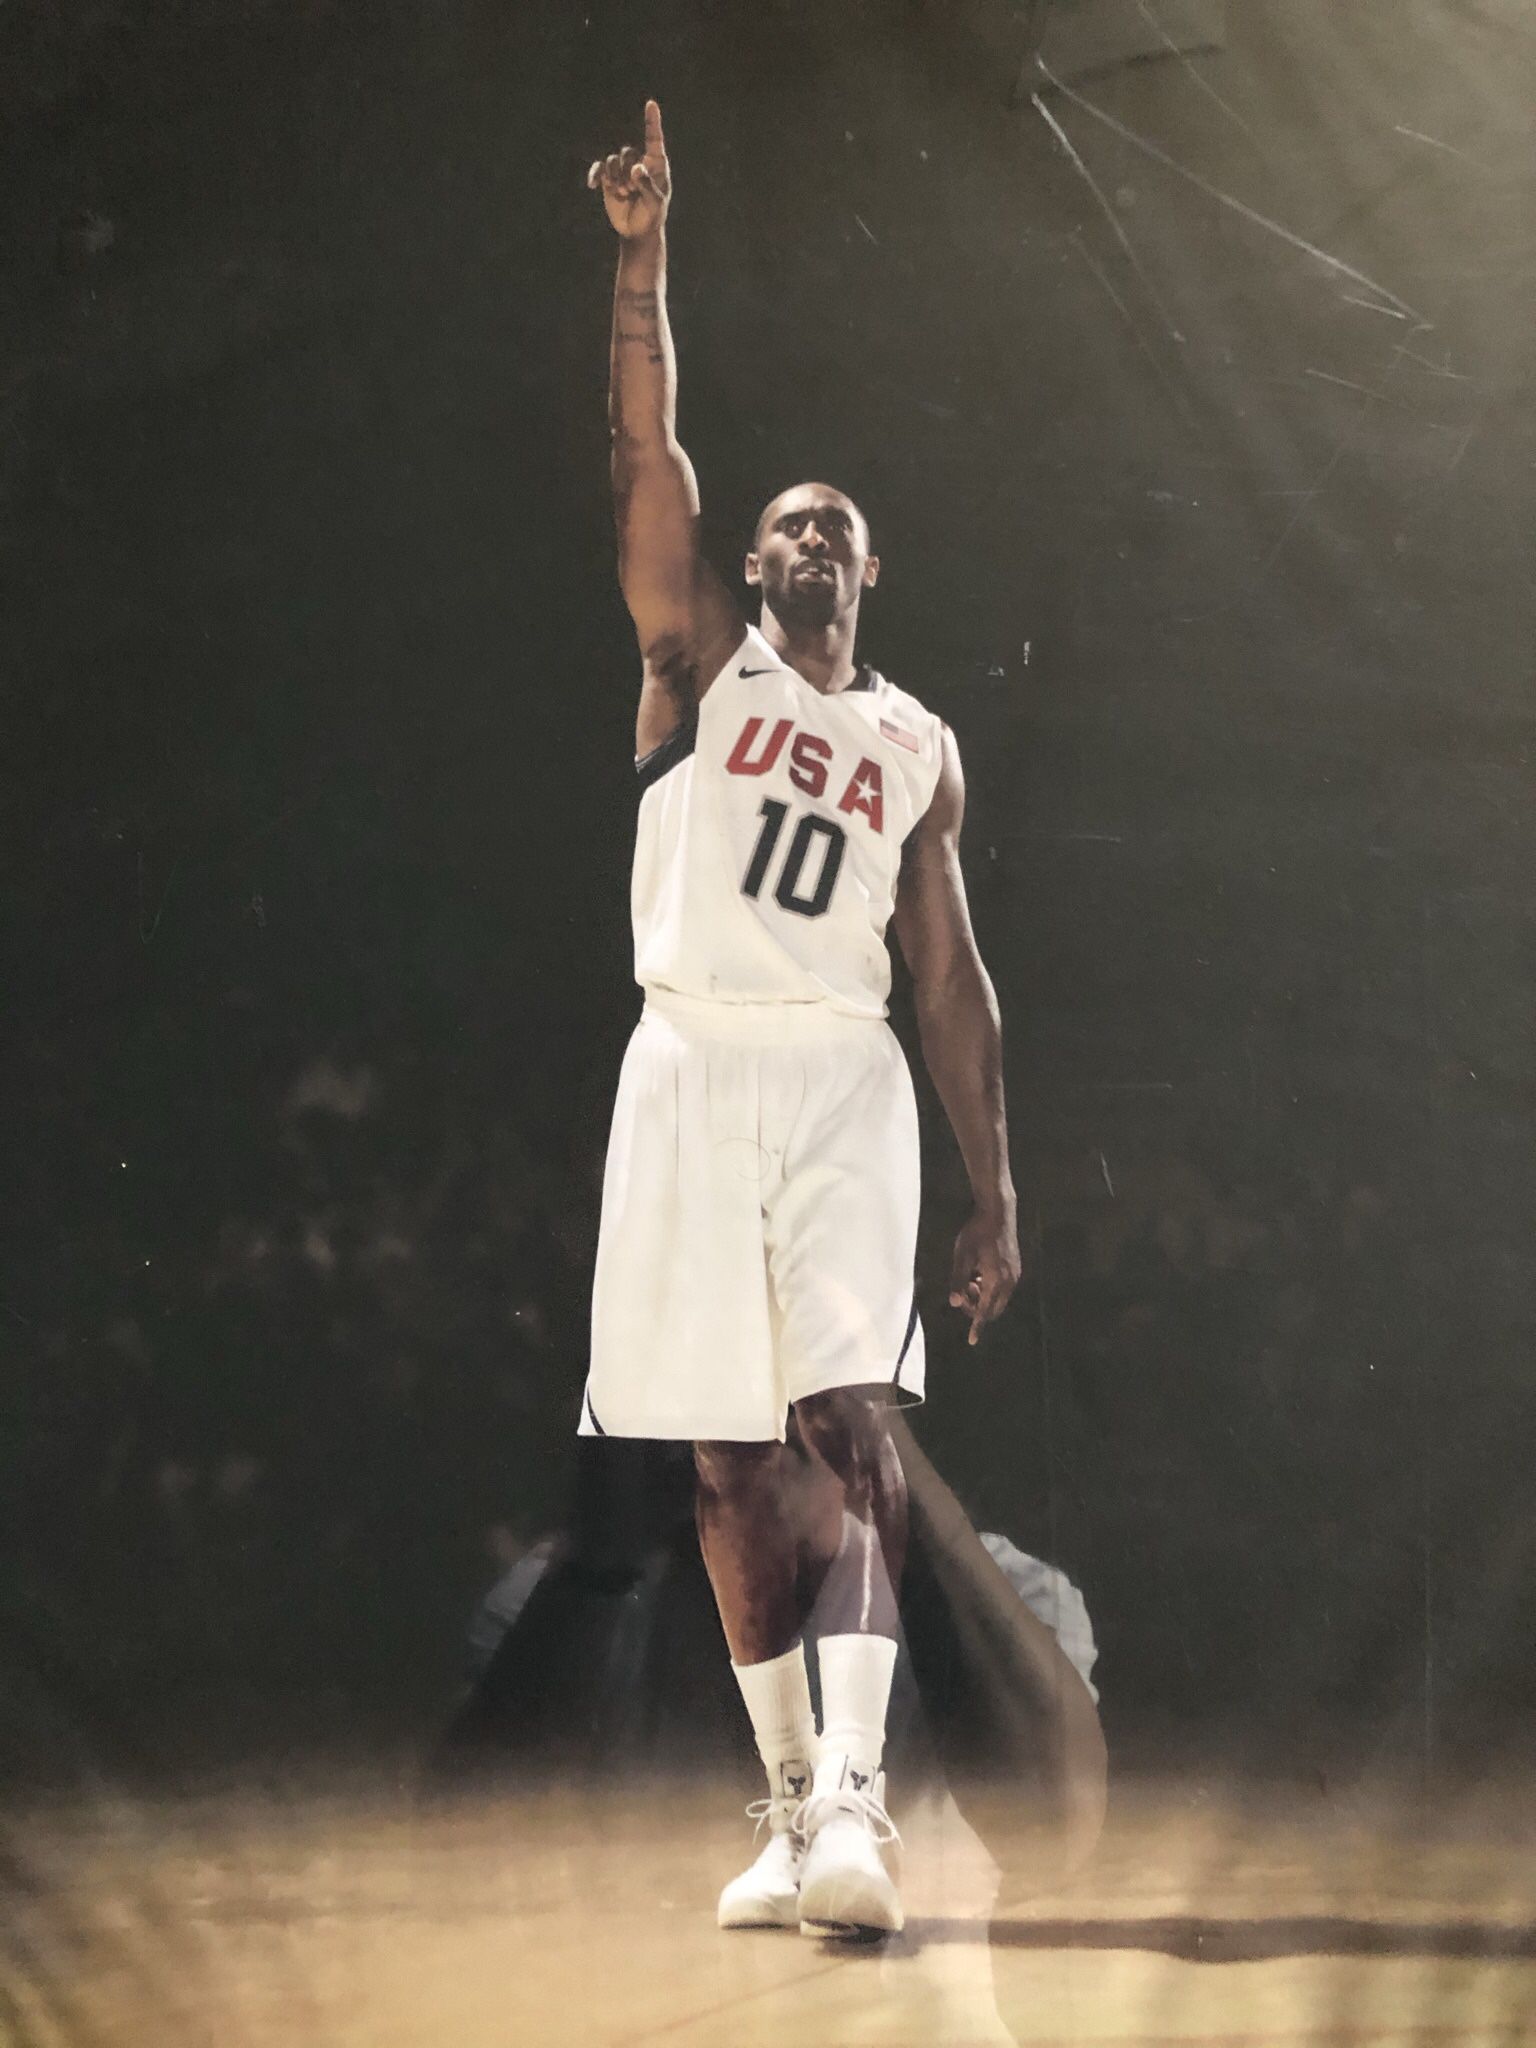 RARE Kobe Bryant USA Canvas with Slam Magazine